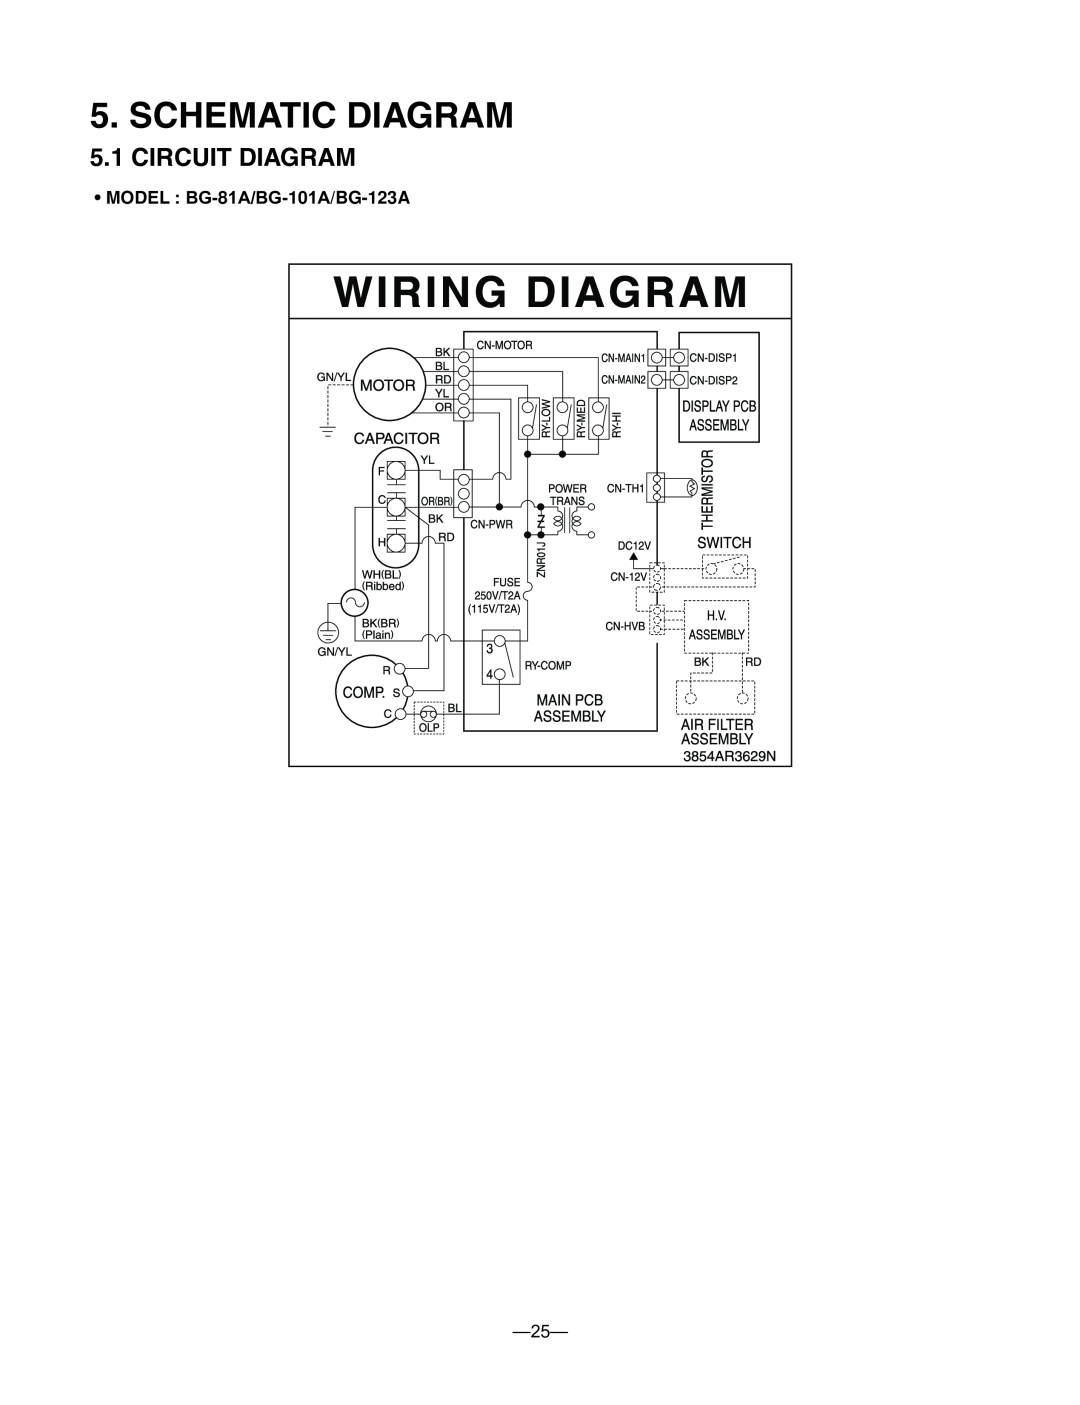 Heat Controller service manual Schematic Diagram, Circuit Diagram, MODEL BG-81A/BG-101A/BG-123A 